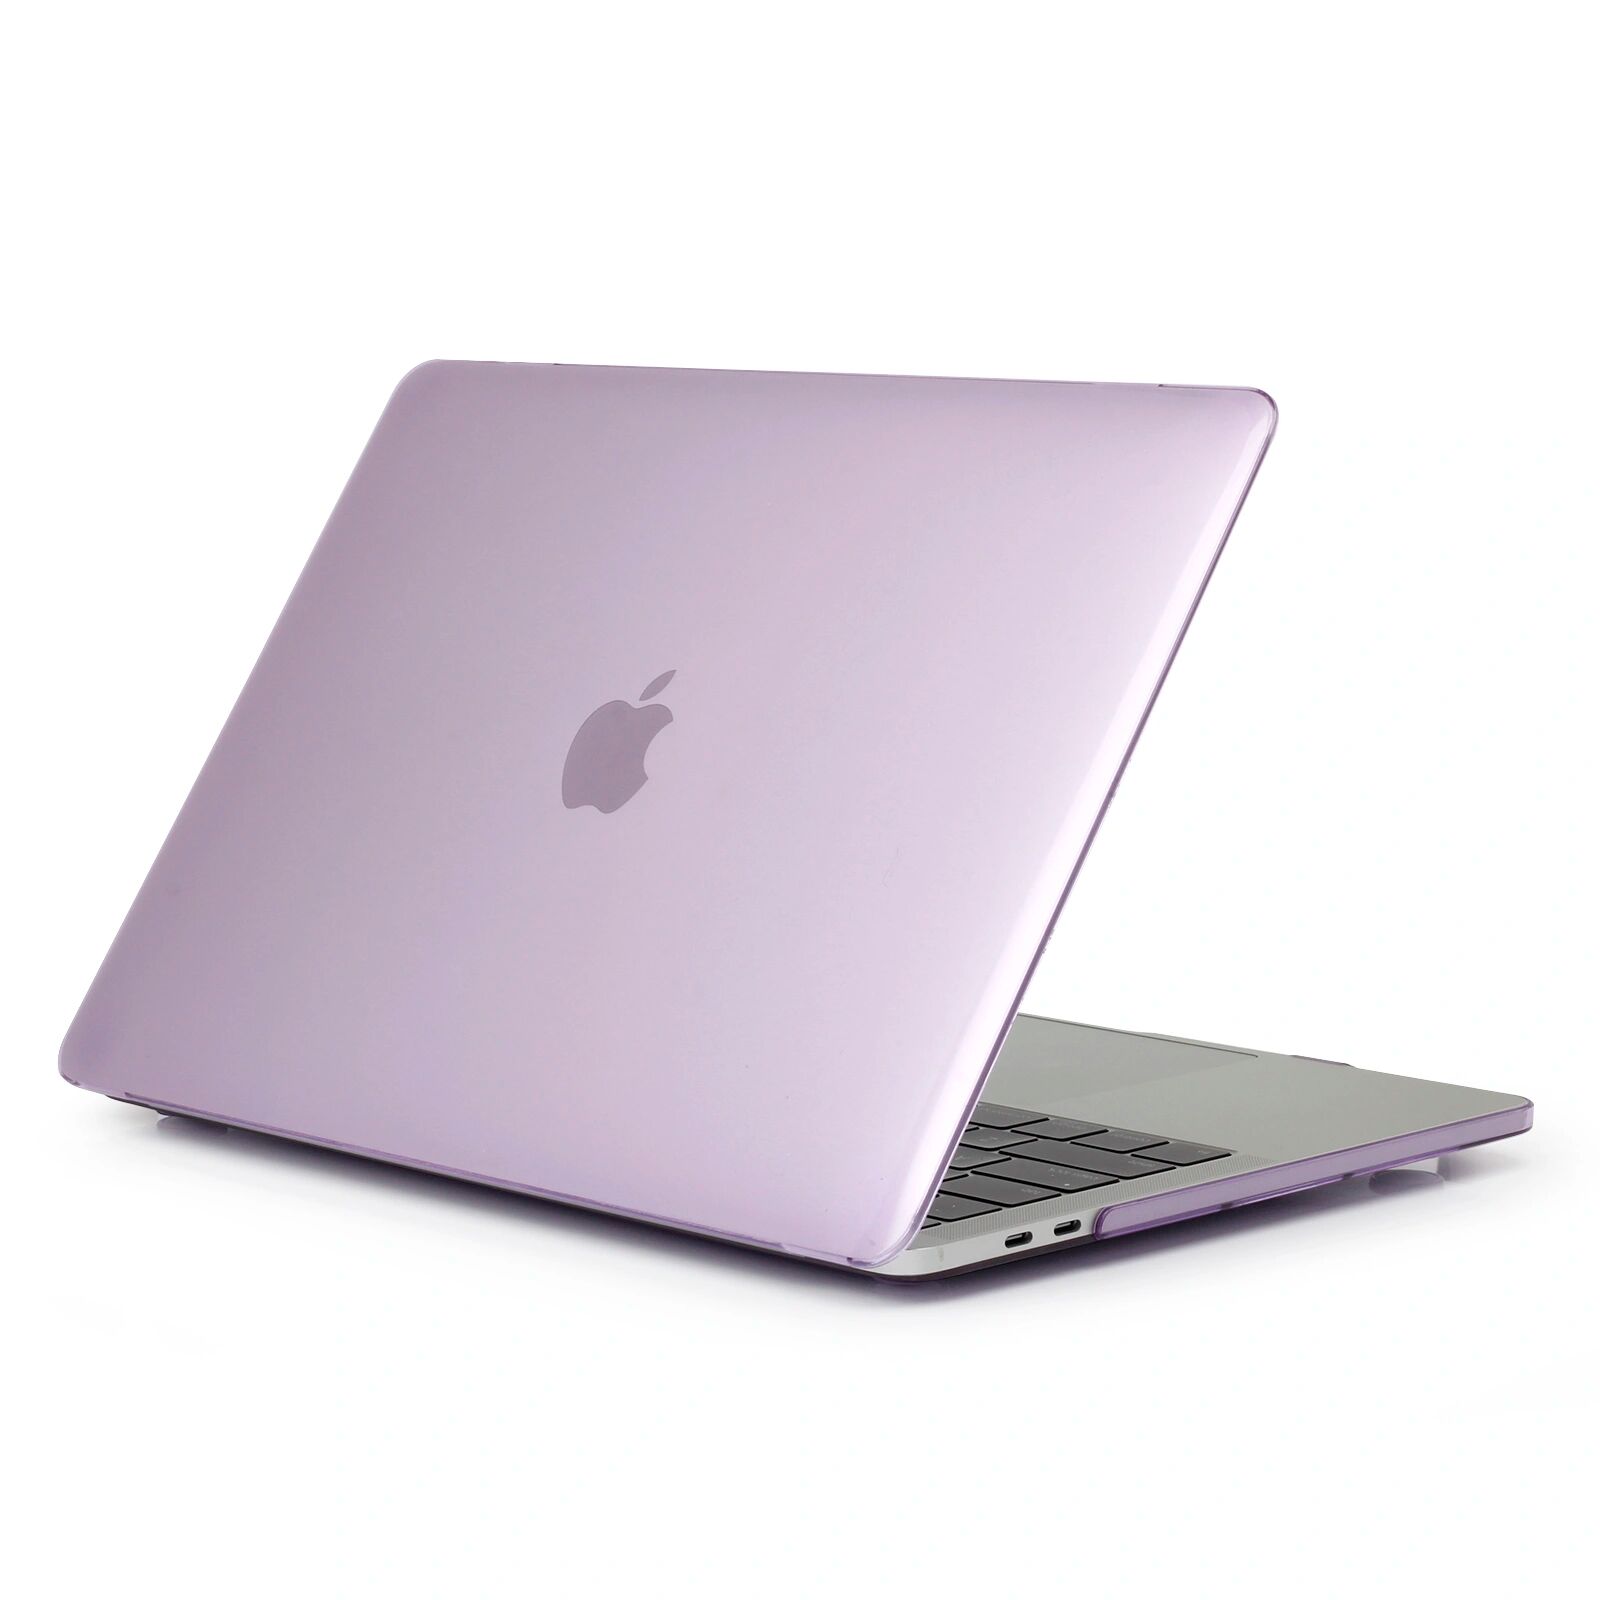 iPouzdro.cz Ochranný kryt na MacBook Pro 15 (2012-2015) - Crystal Purple